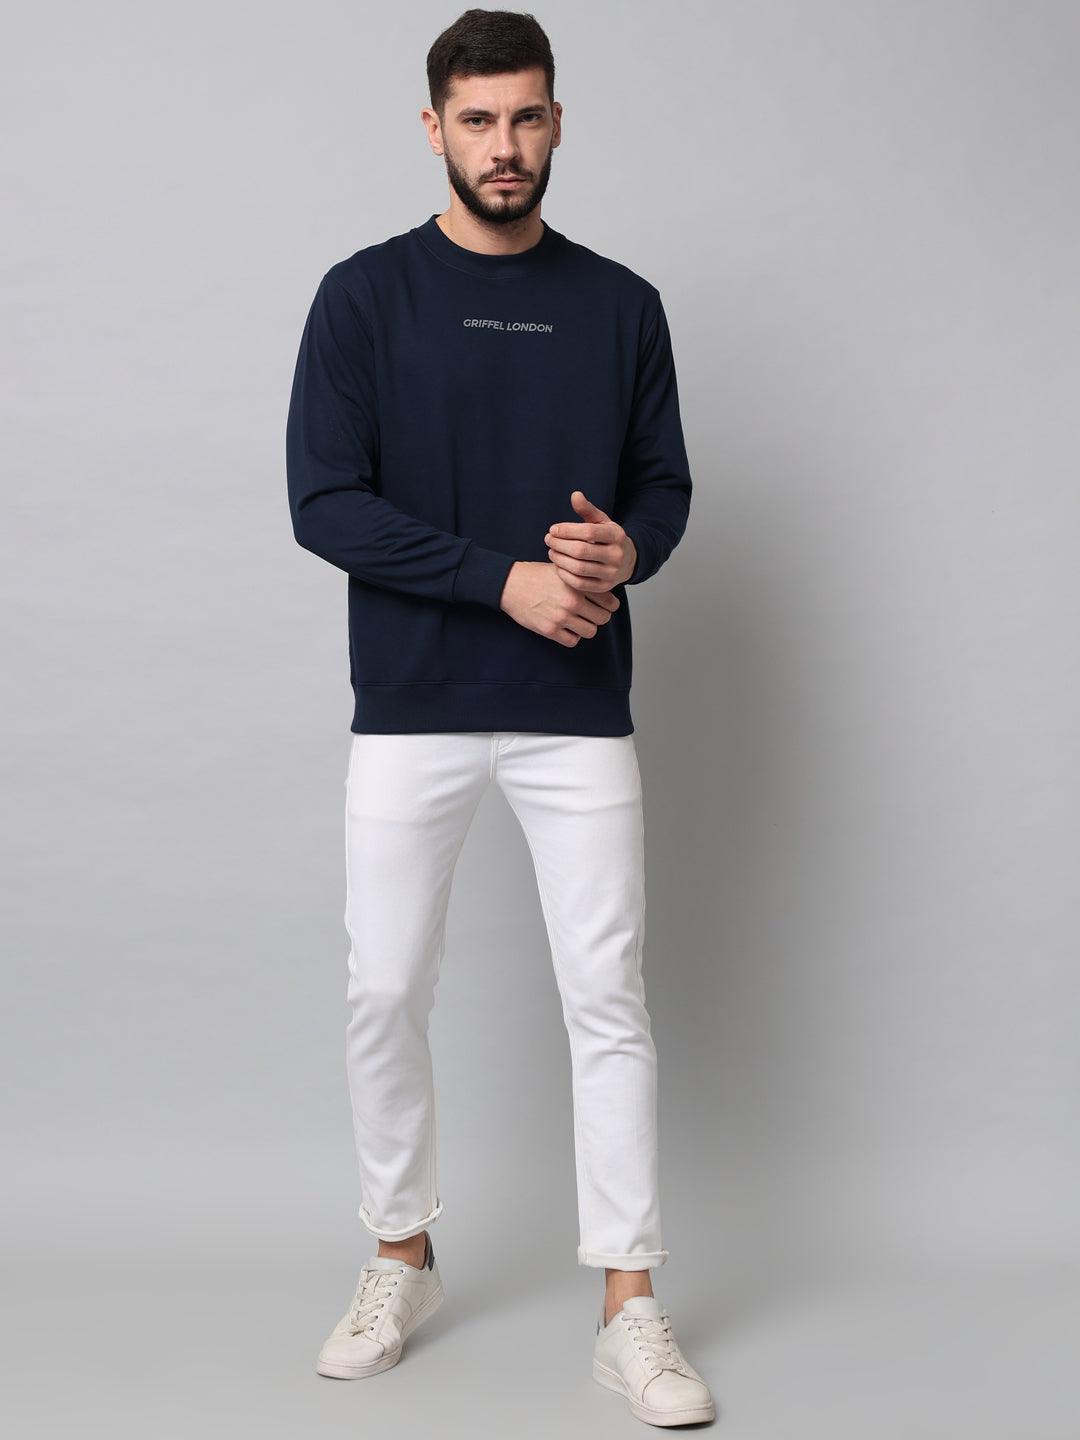 Griffel Men's Cotton Fleece Round Neck Navy Sweatshirt with Full Sleeve and Front Logo Print - griffel